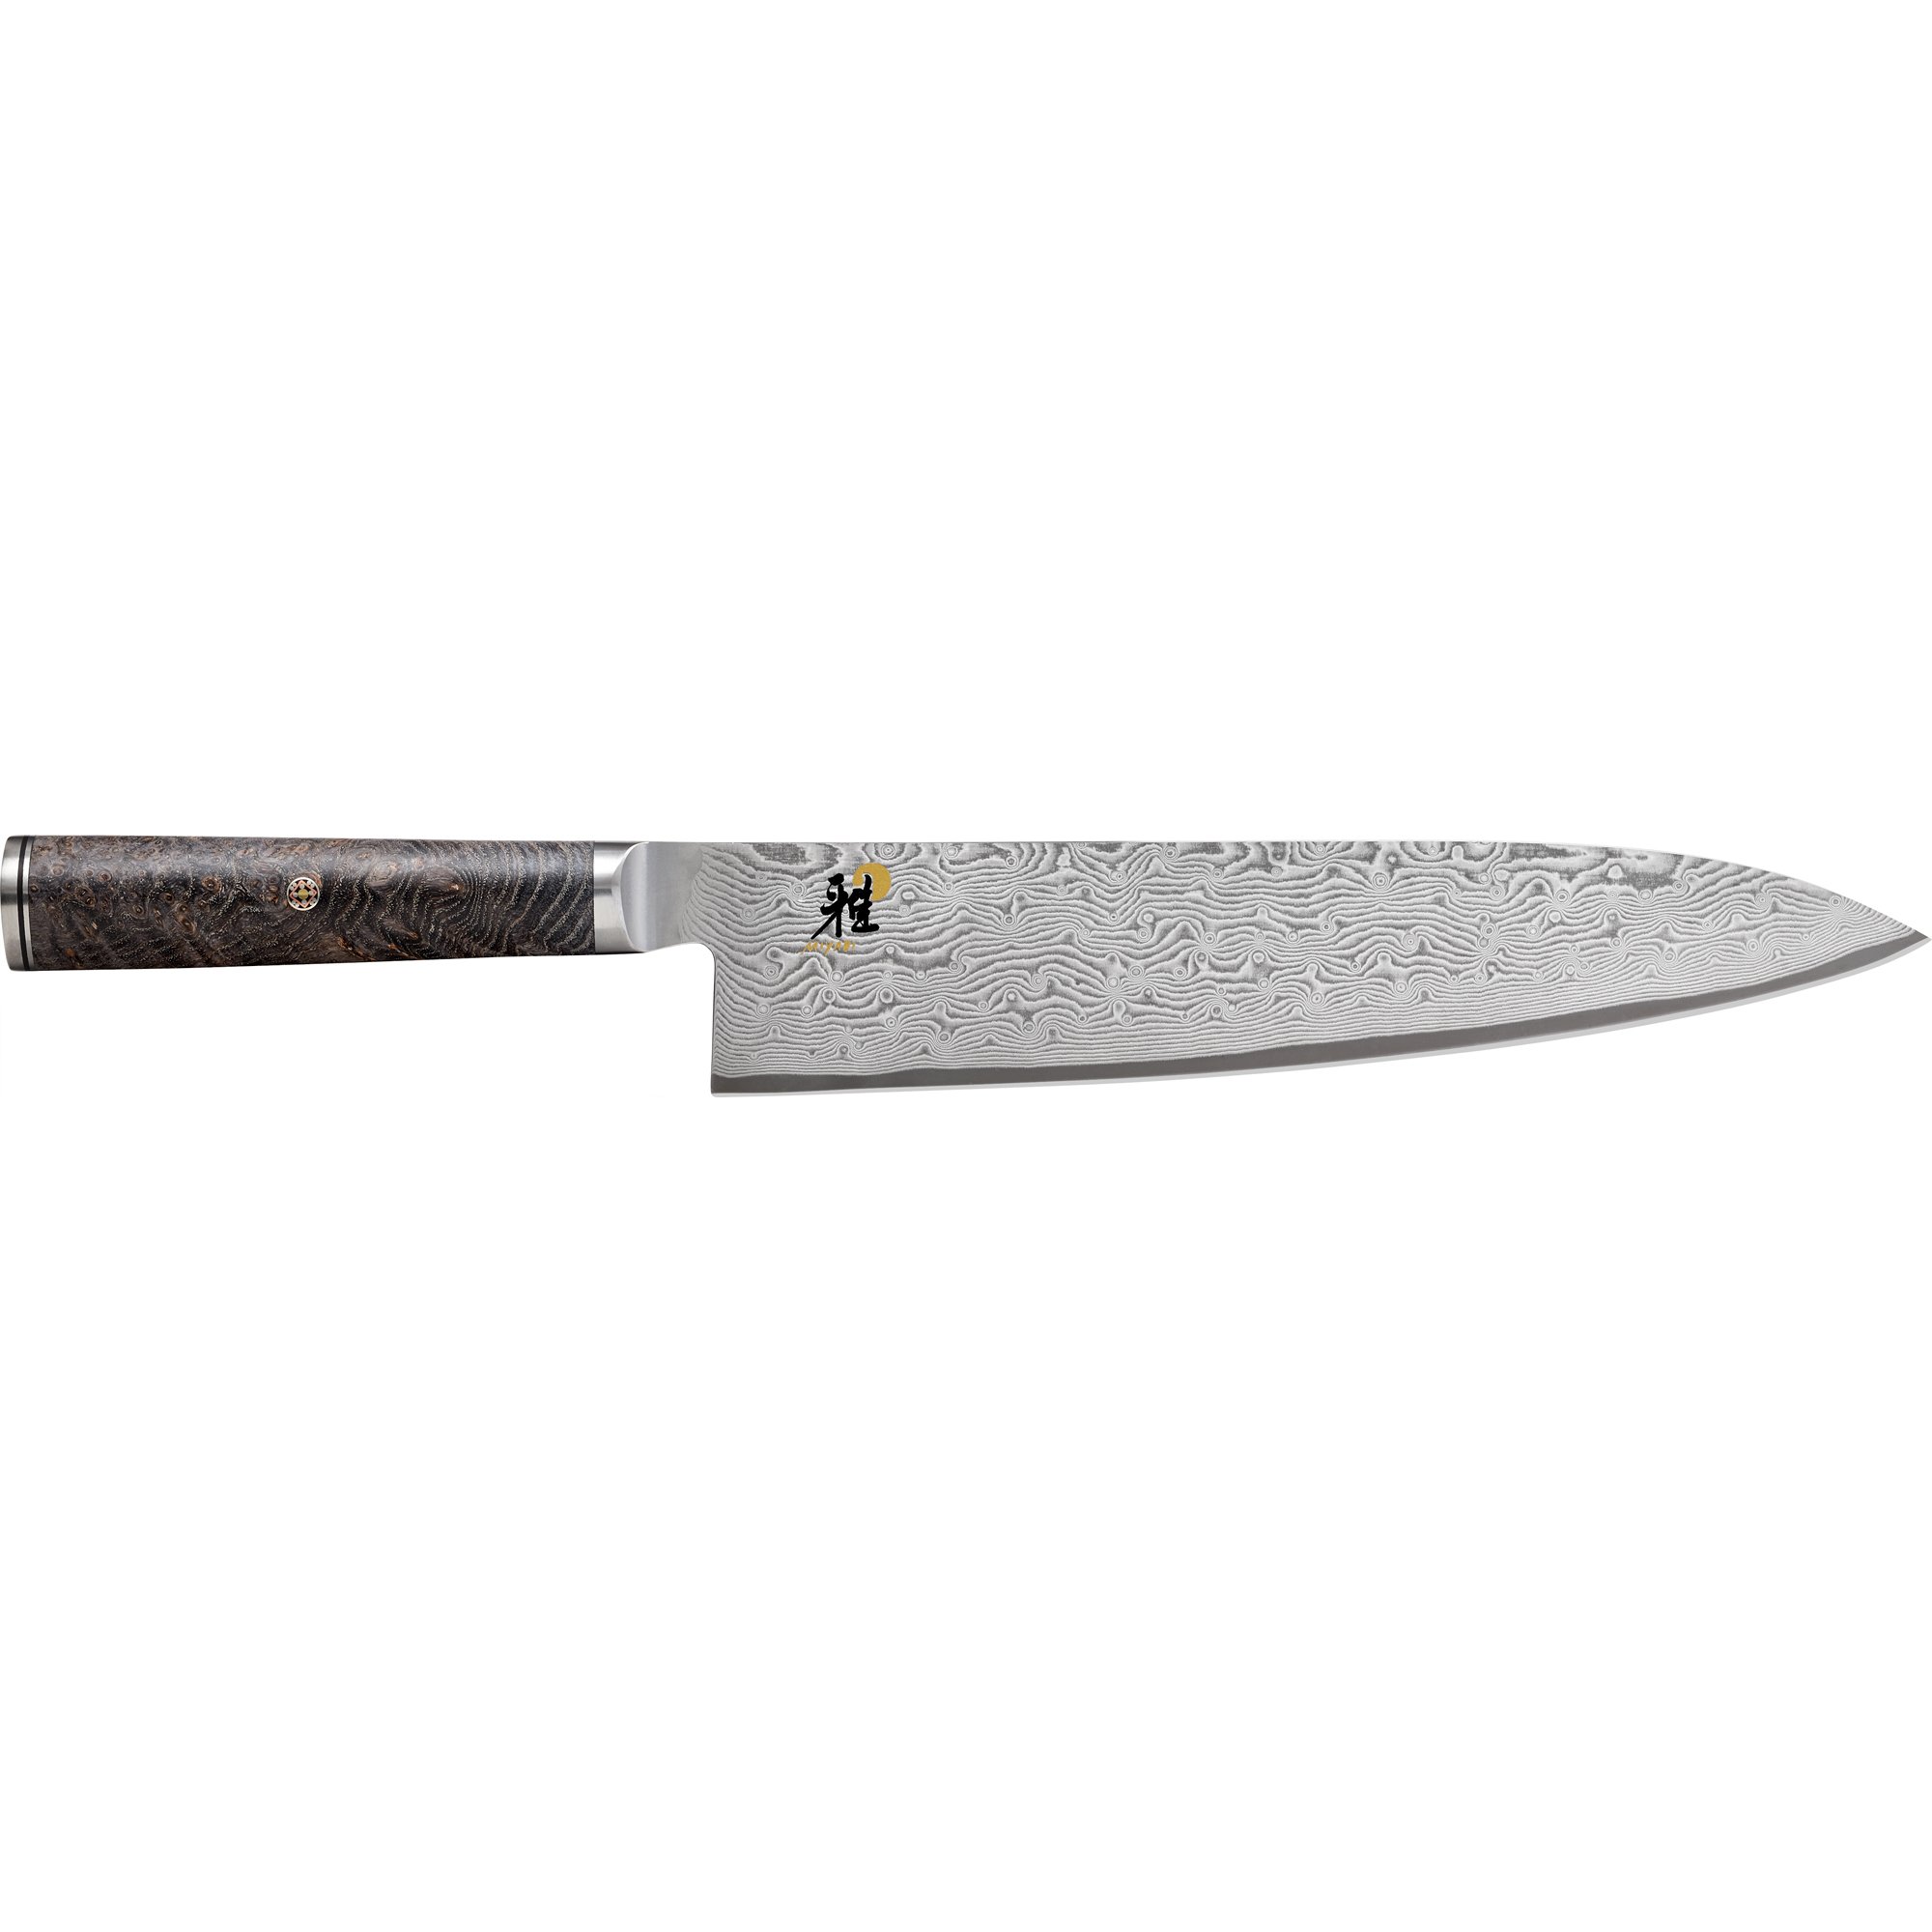 6: Miyabi 5000MCD 67 black kokkekniv, 24 cm.